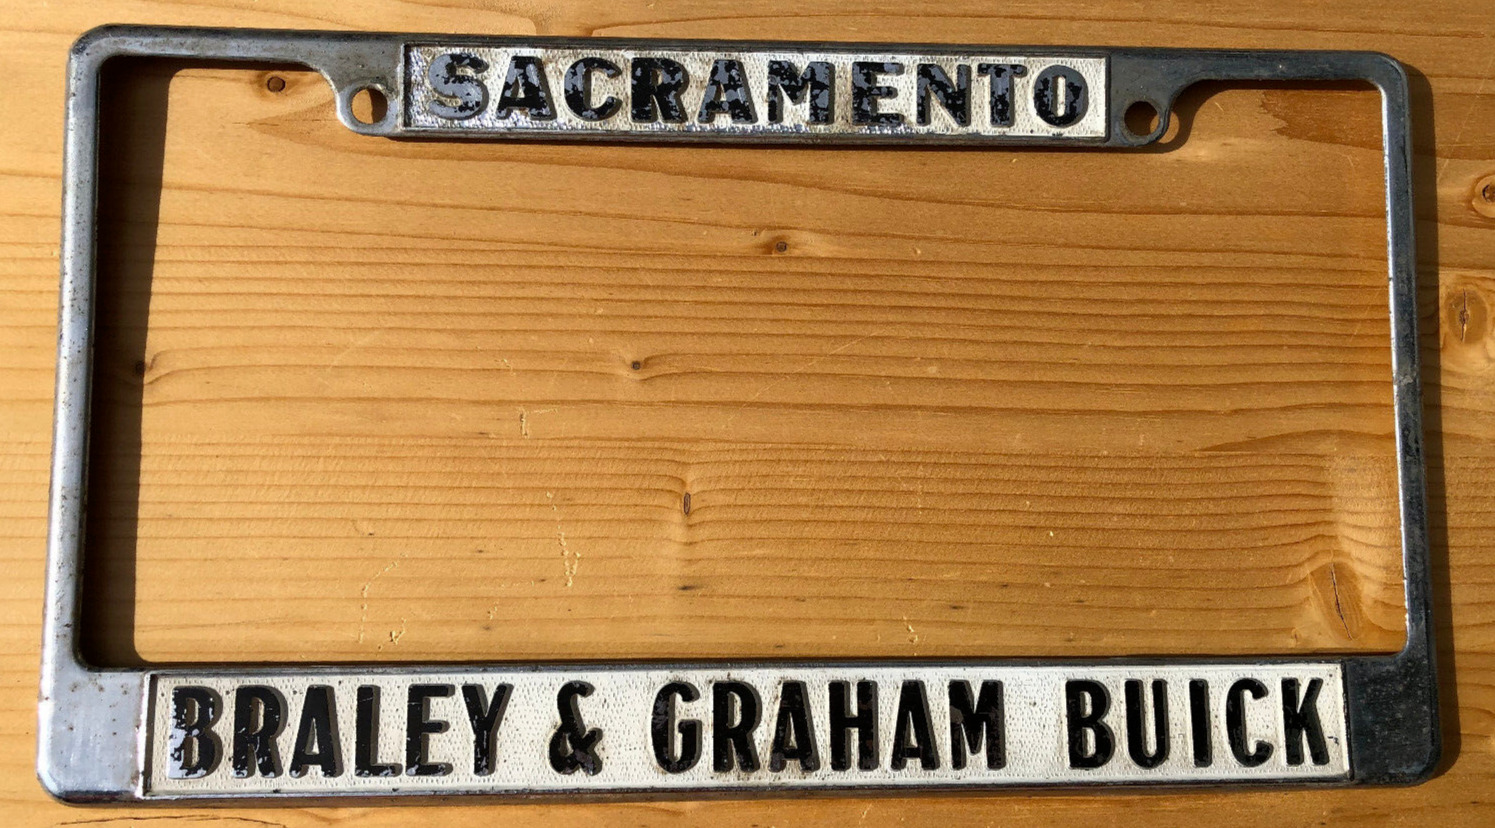 Vintage Sacramento Braley & Graham Buick Metal License Plate Frame Chrome Auto